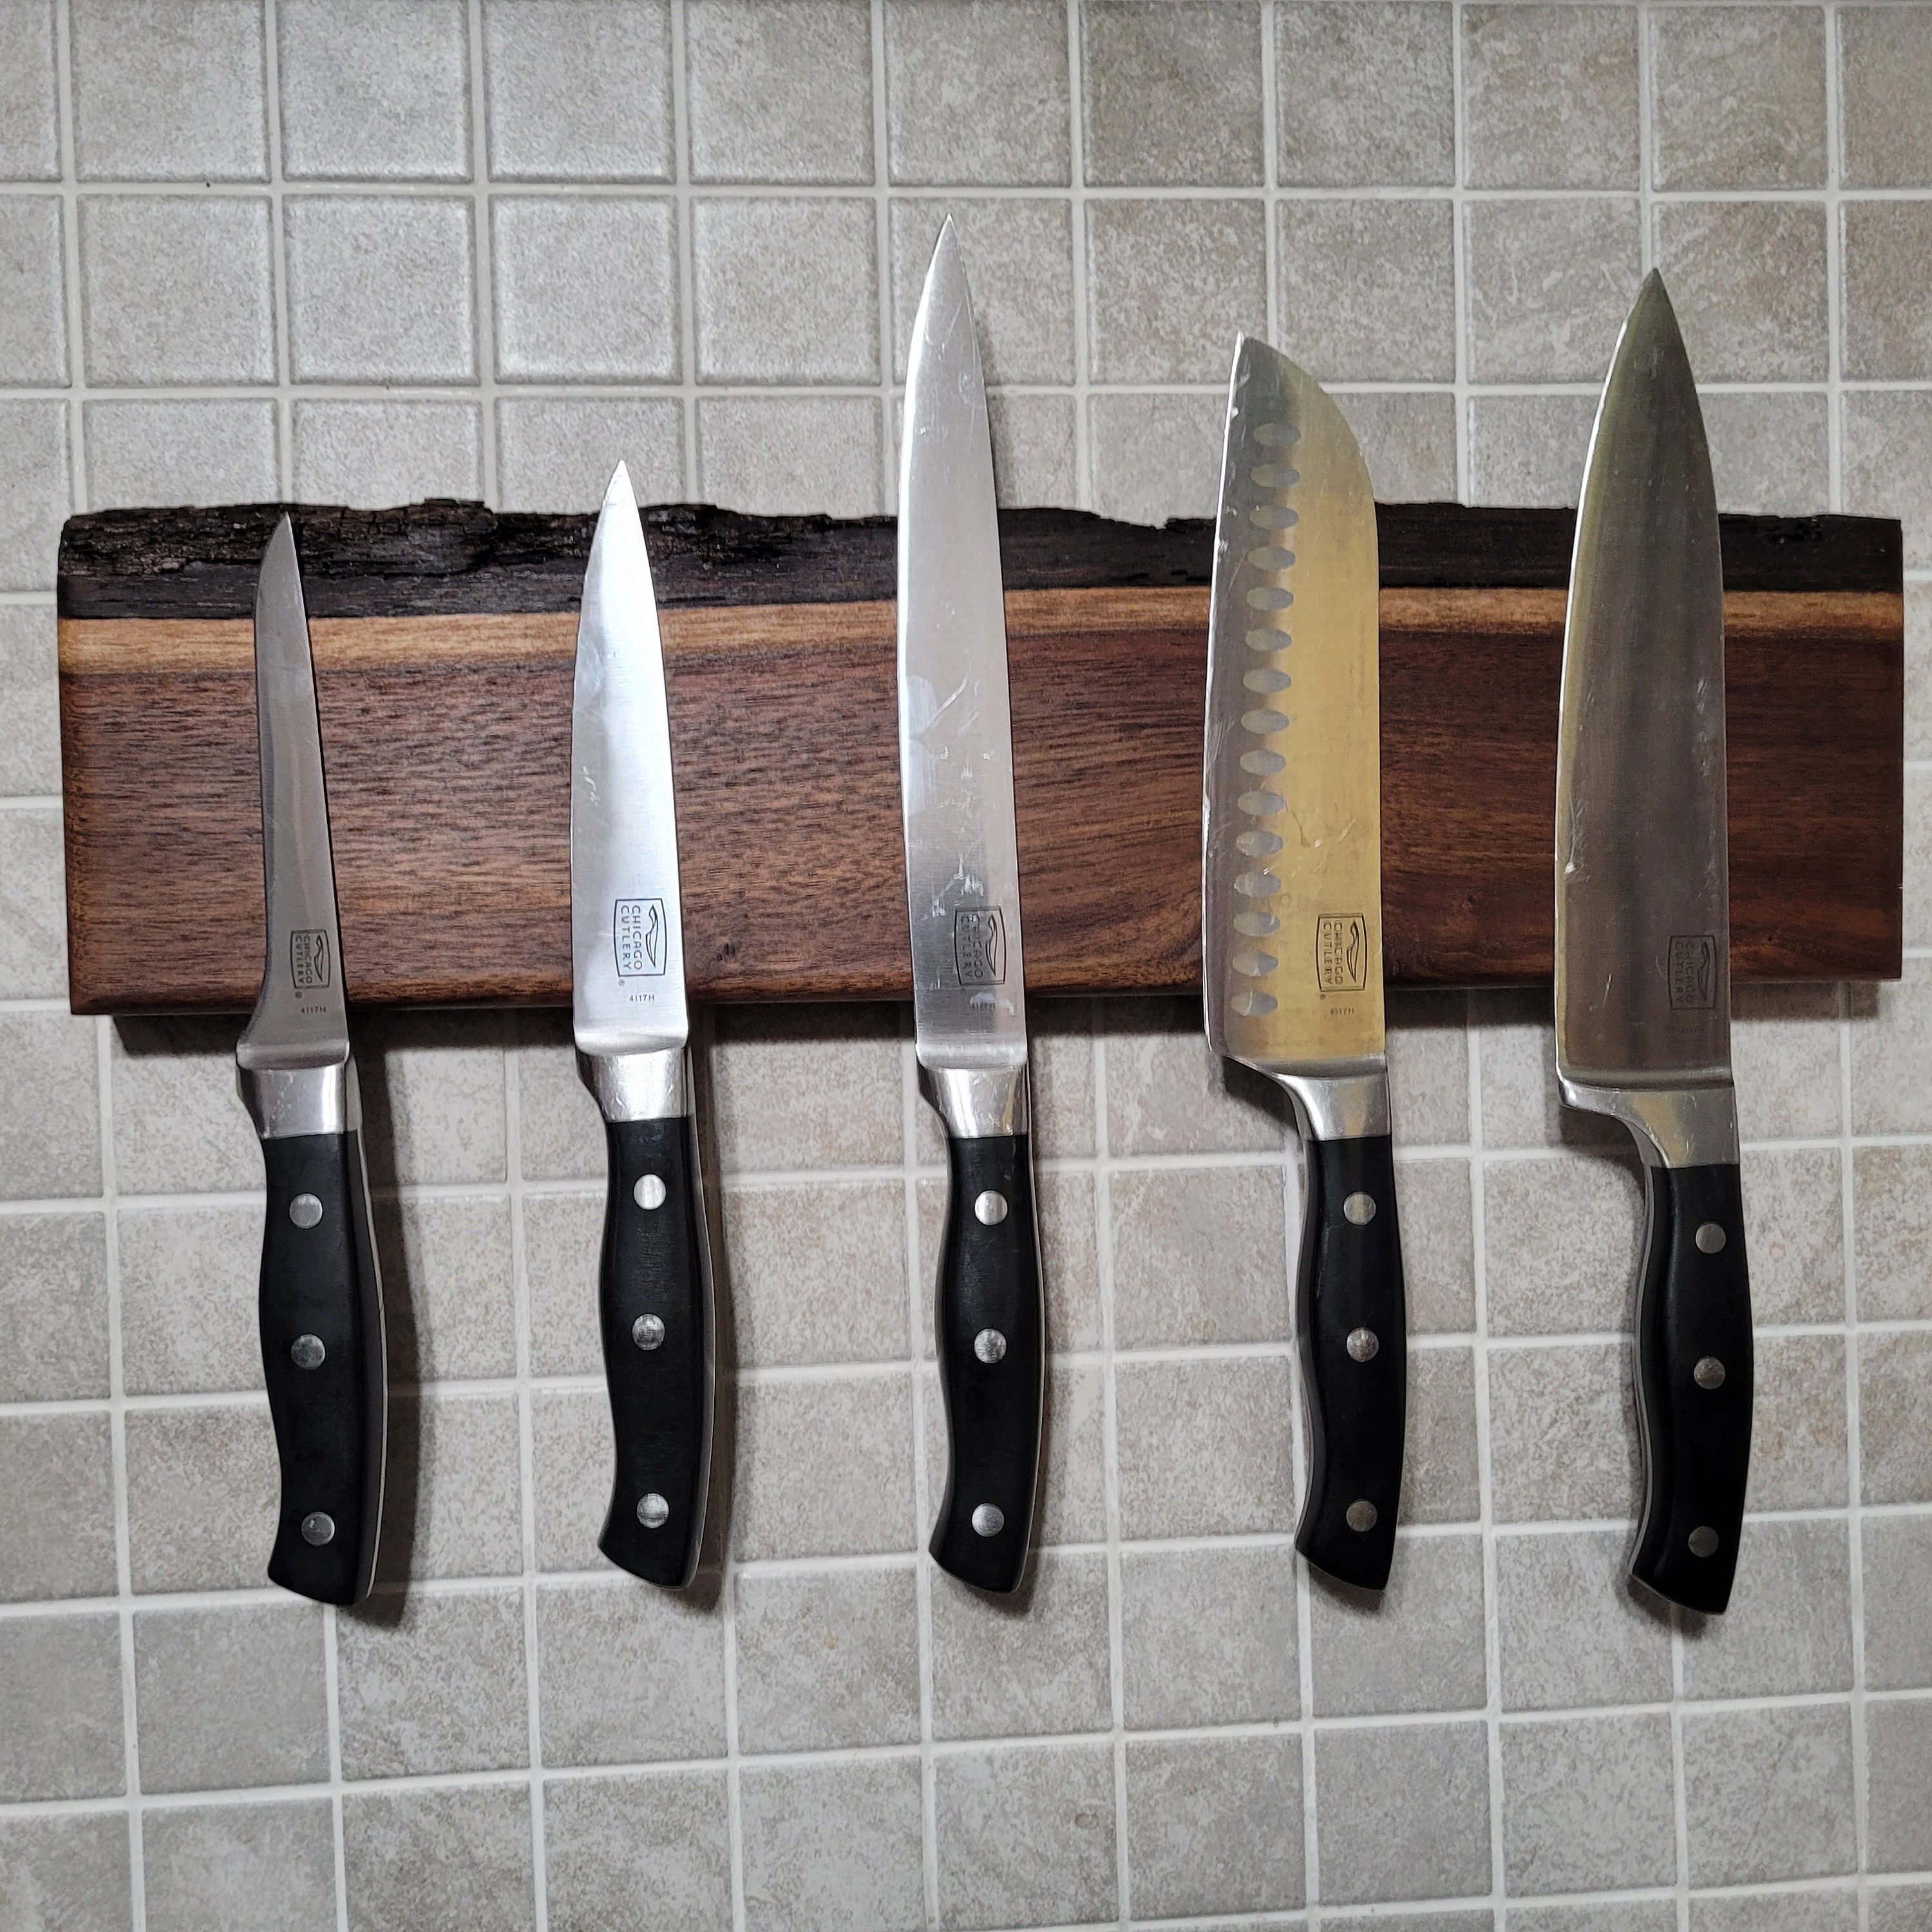 Wood Magnetic Knife Block - Double Sided Wooden Magnet Holder Board Stand for Kitchen Knives, Scissors, Metal Utensils - Walnut, 8.9 x 8.7 in Gardenix